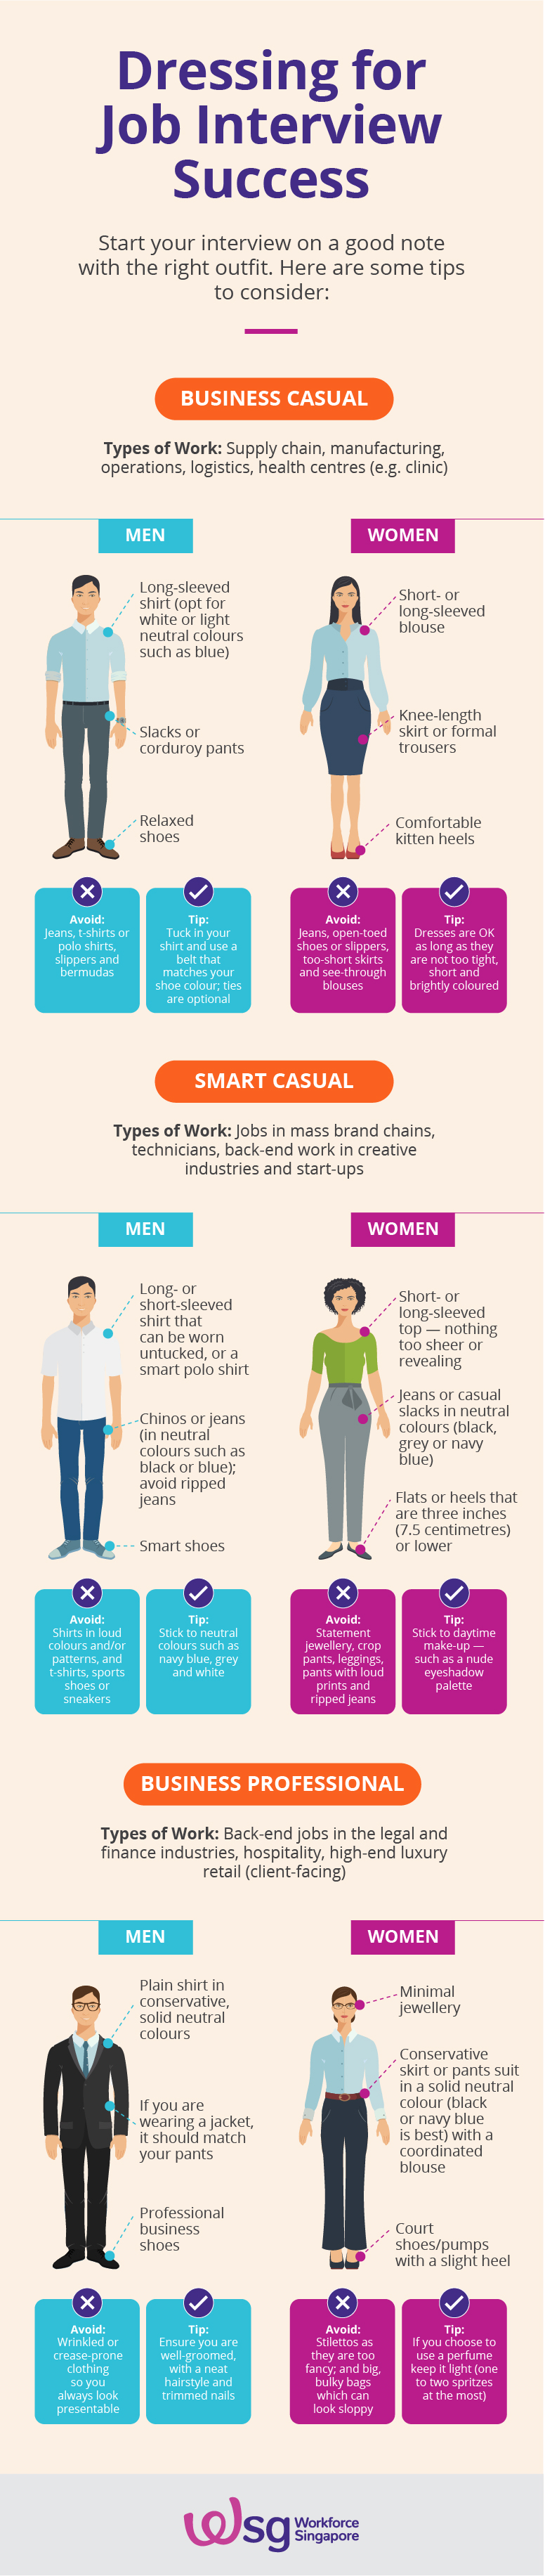 Dressing for job interviews for men and women